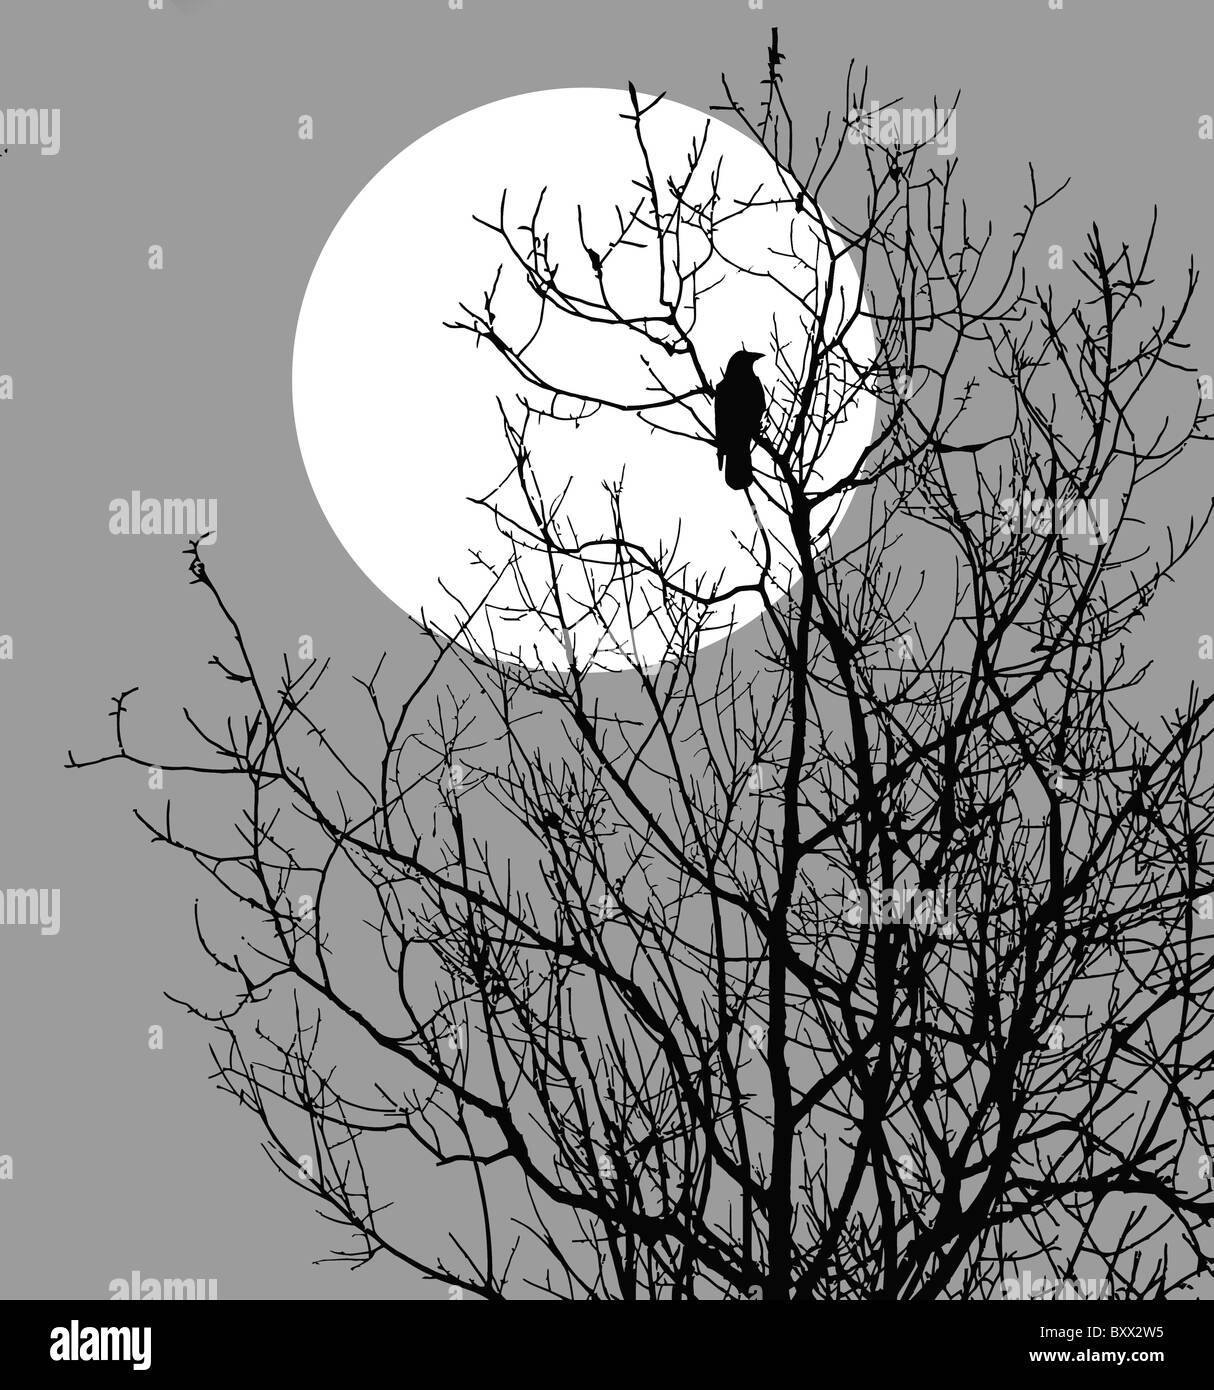 vector illustration ravens sitting on tree against sun Stock Photo